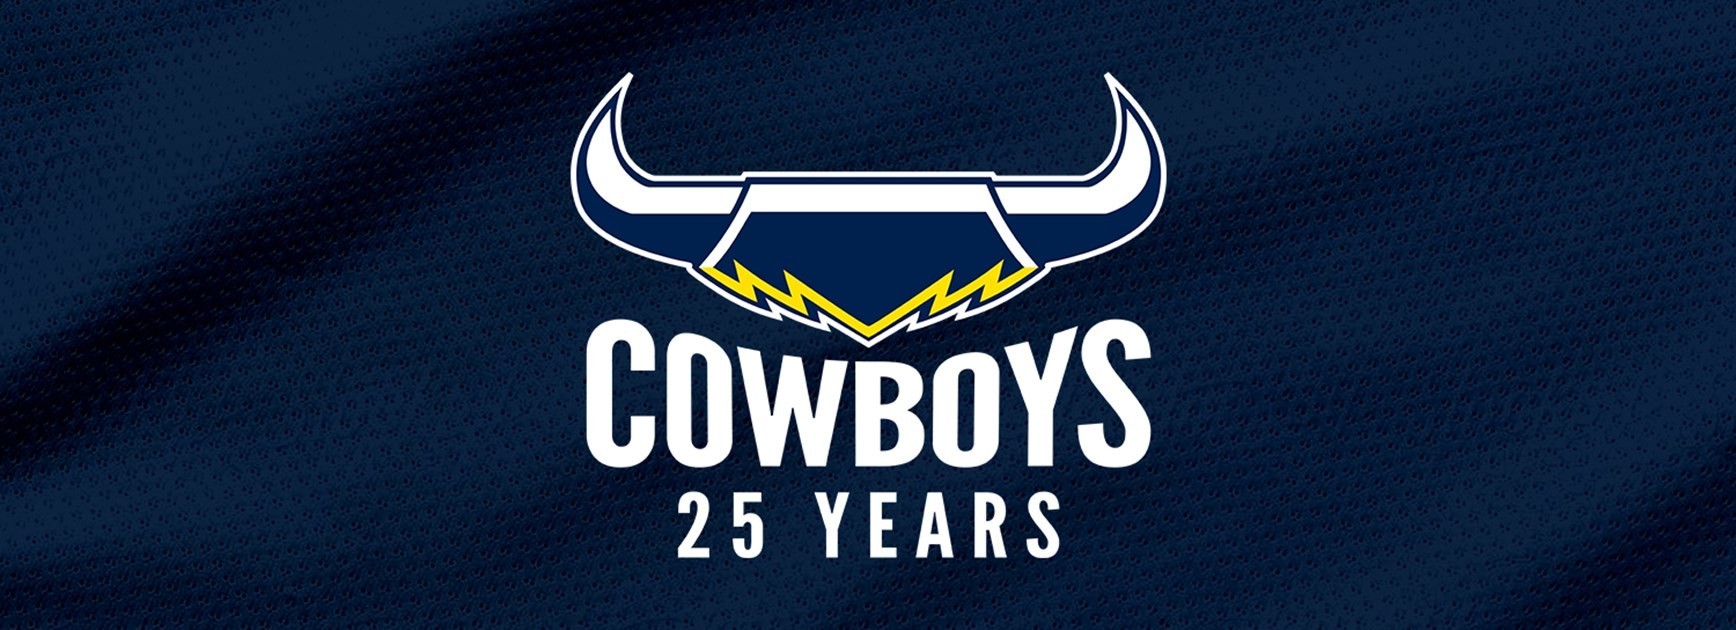 Cowboys 25 Years Wallpaper